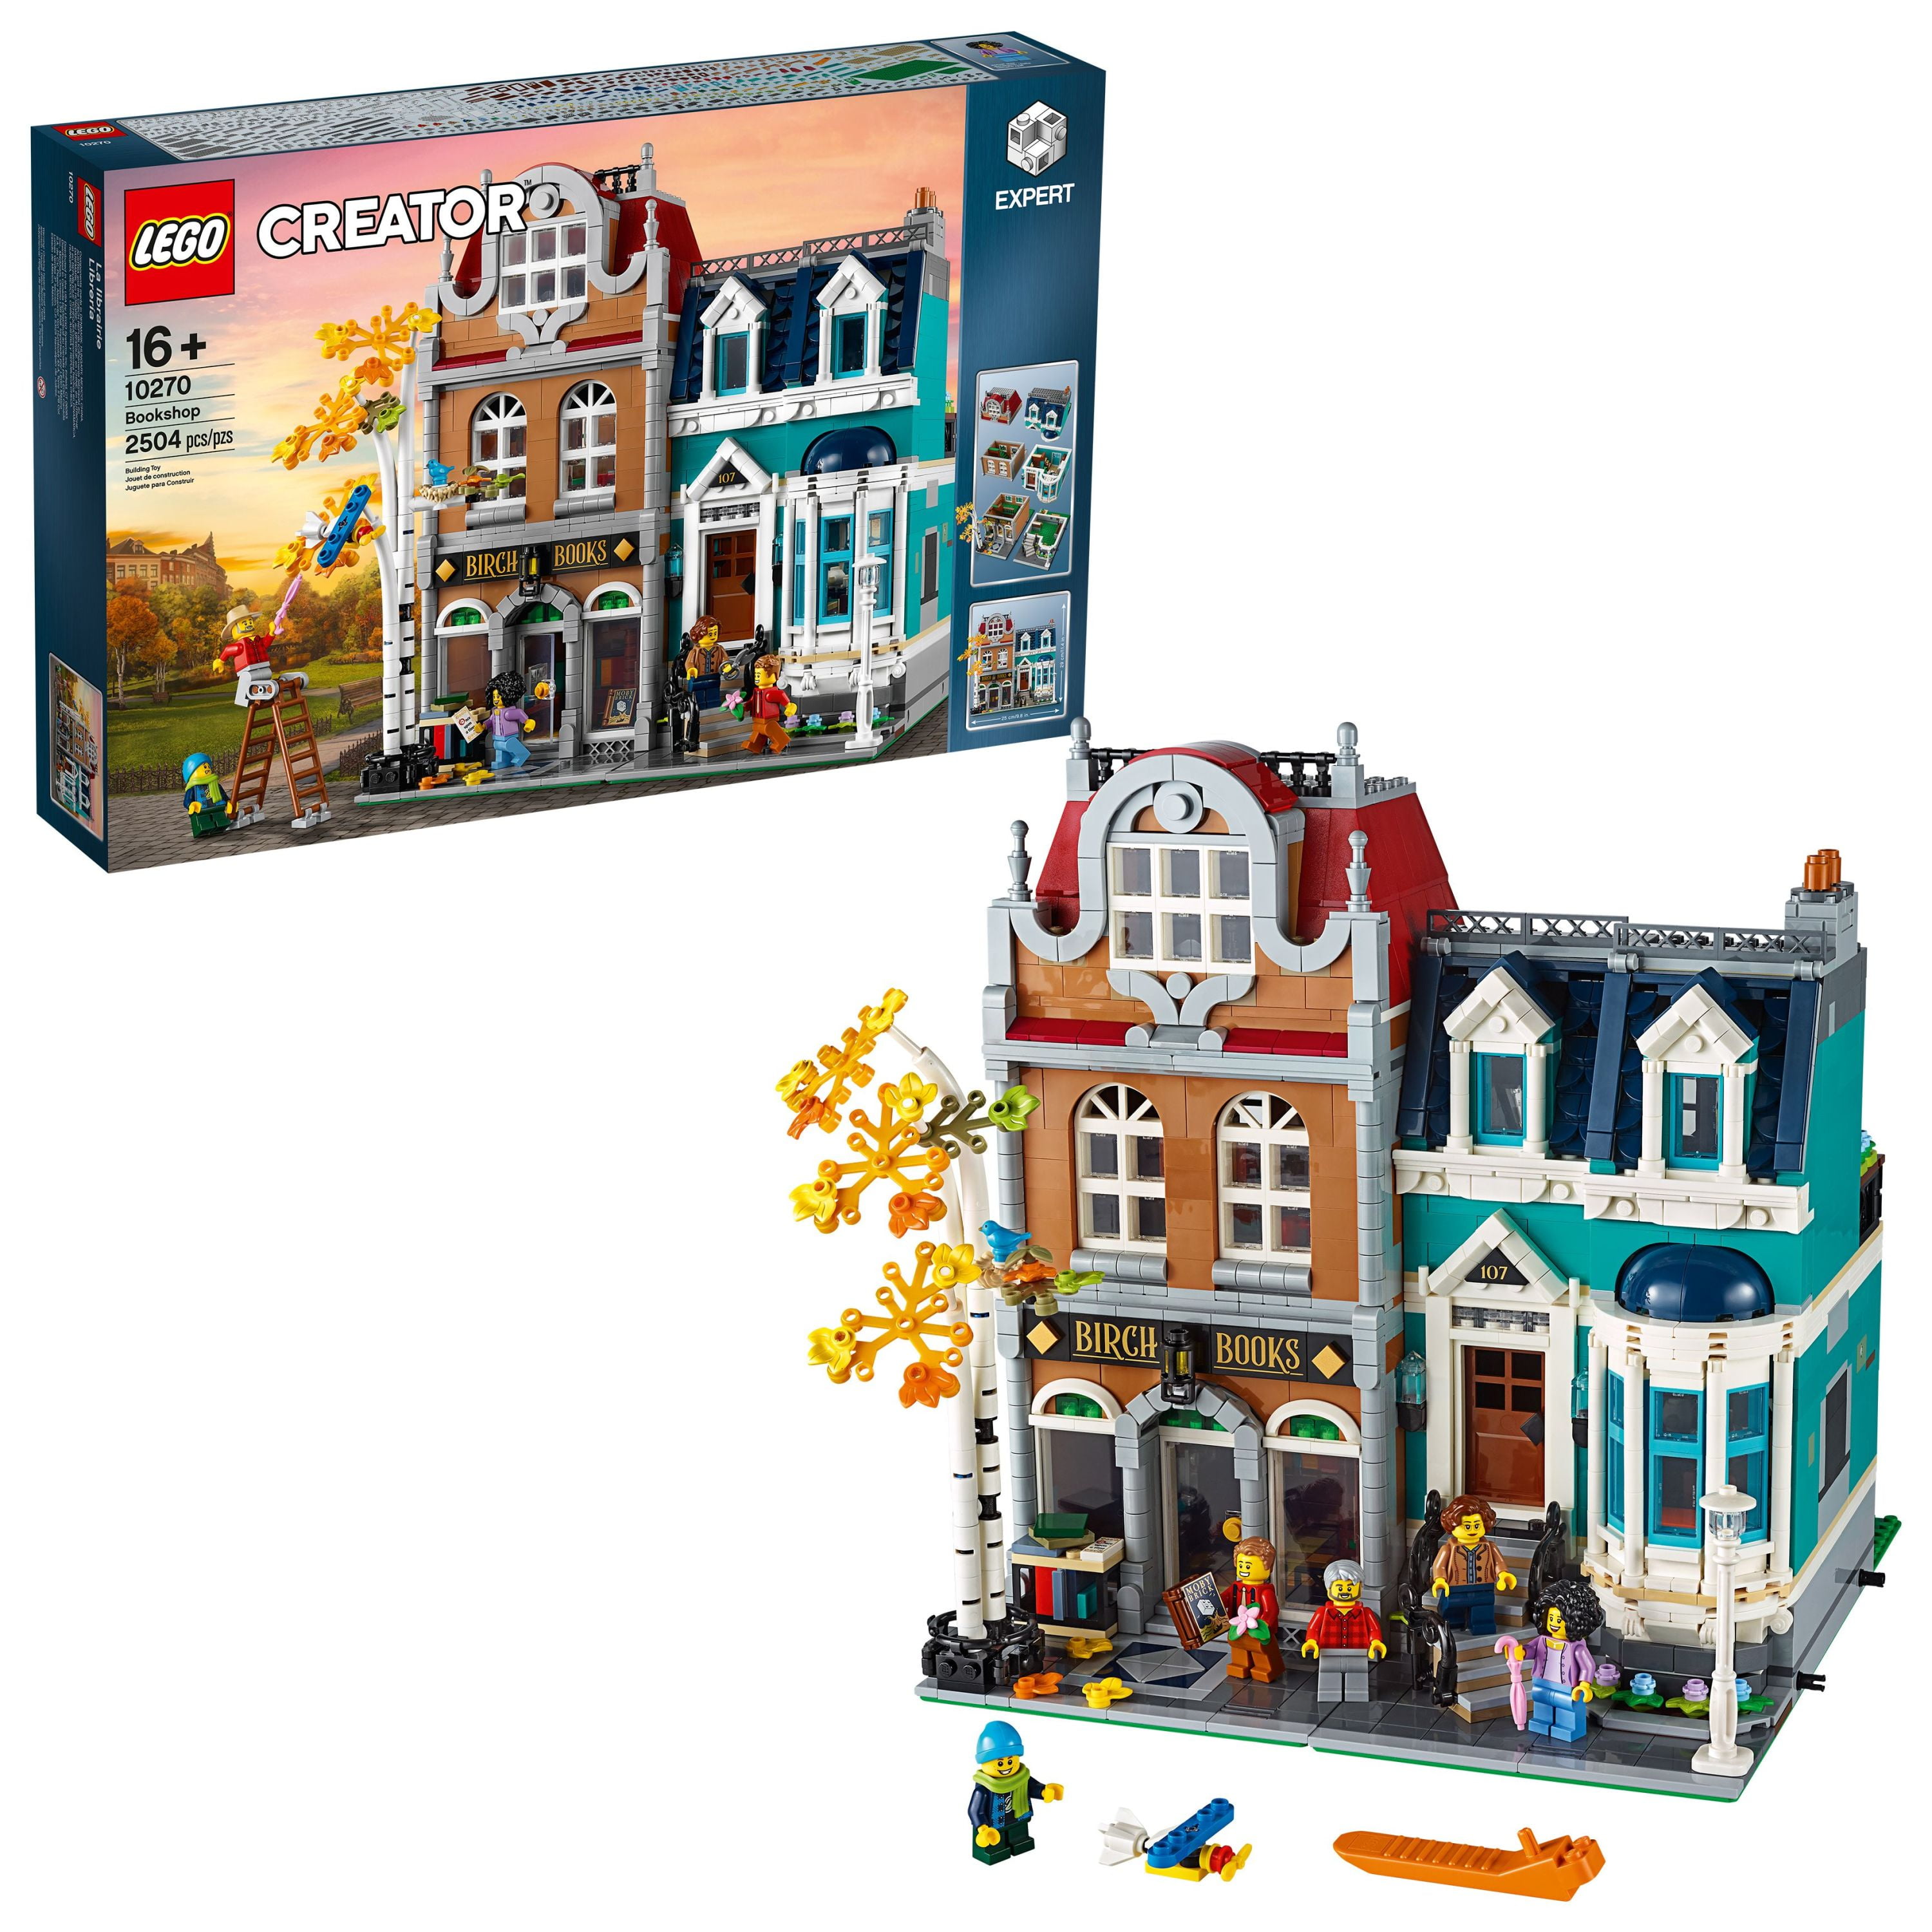 locker avis hvor som helst LEGO Creator Expert Bookshop 10270 Modular Building, Home Décor Display Set  for Collectors, Advanced Collection, Gift Idea for 16 plus Year Olds -  Walmart.com